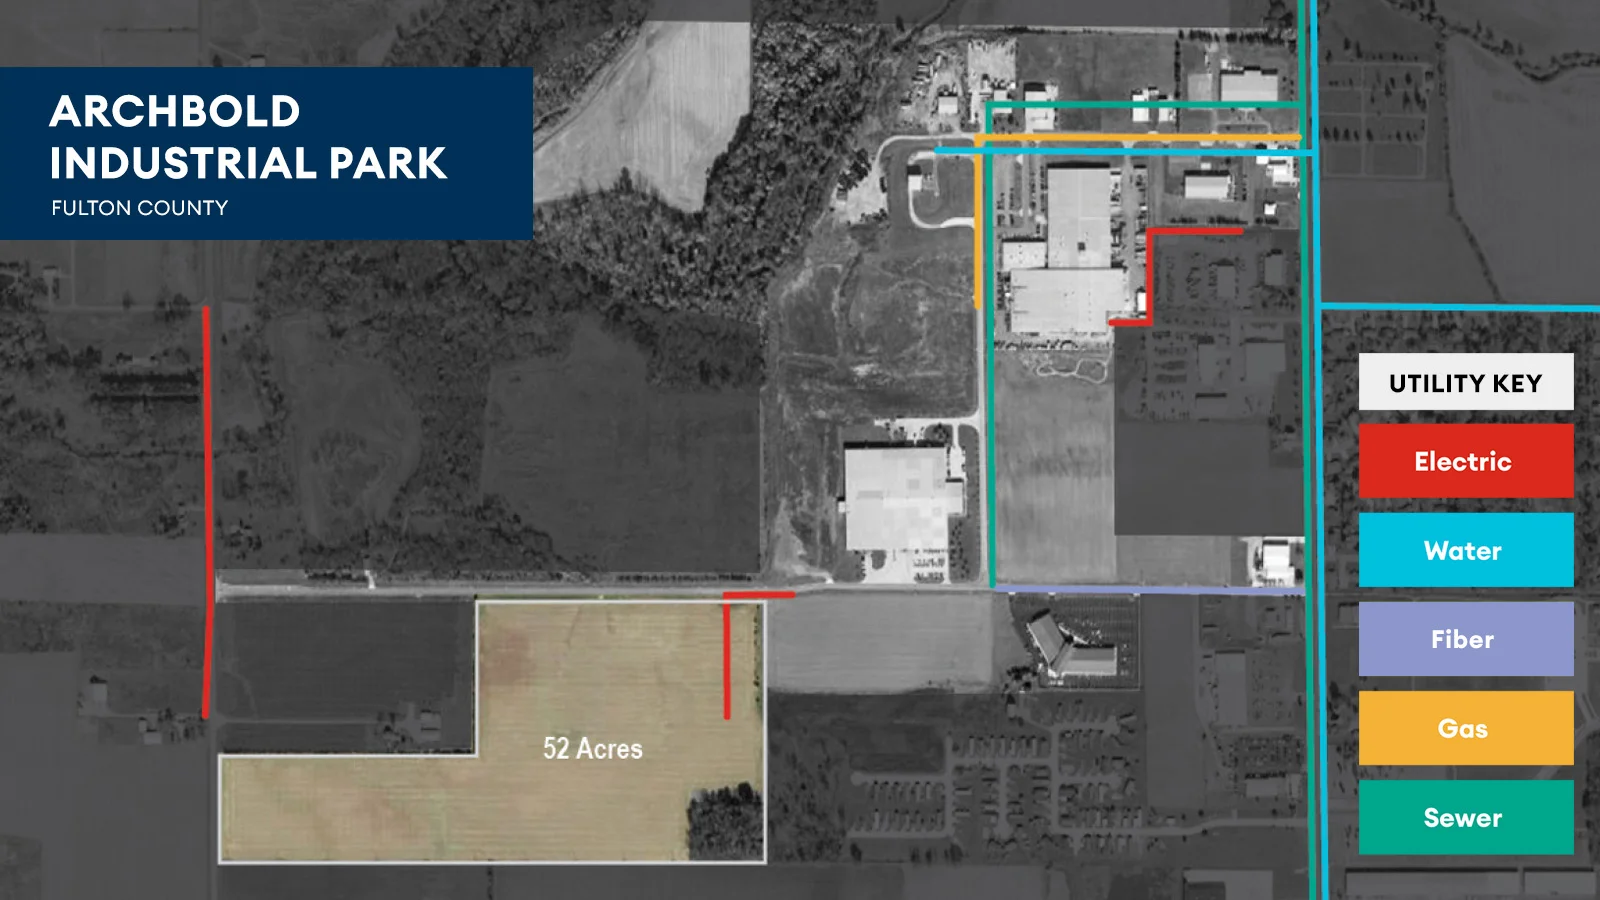 Archbold Industrial Park Utility Map